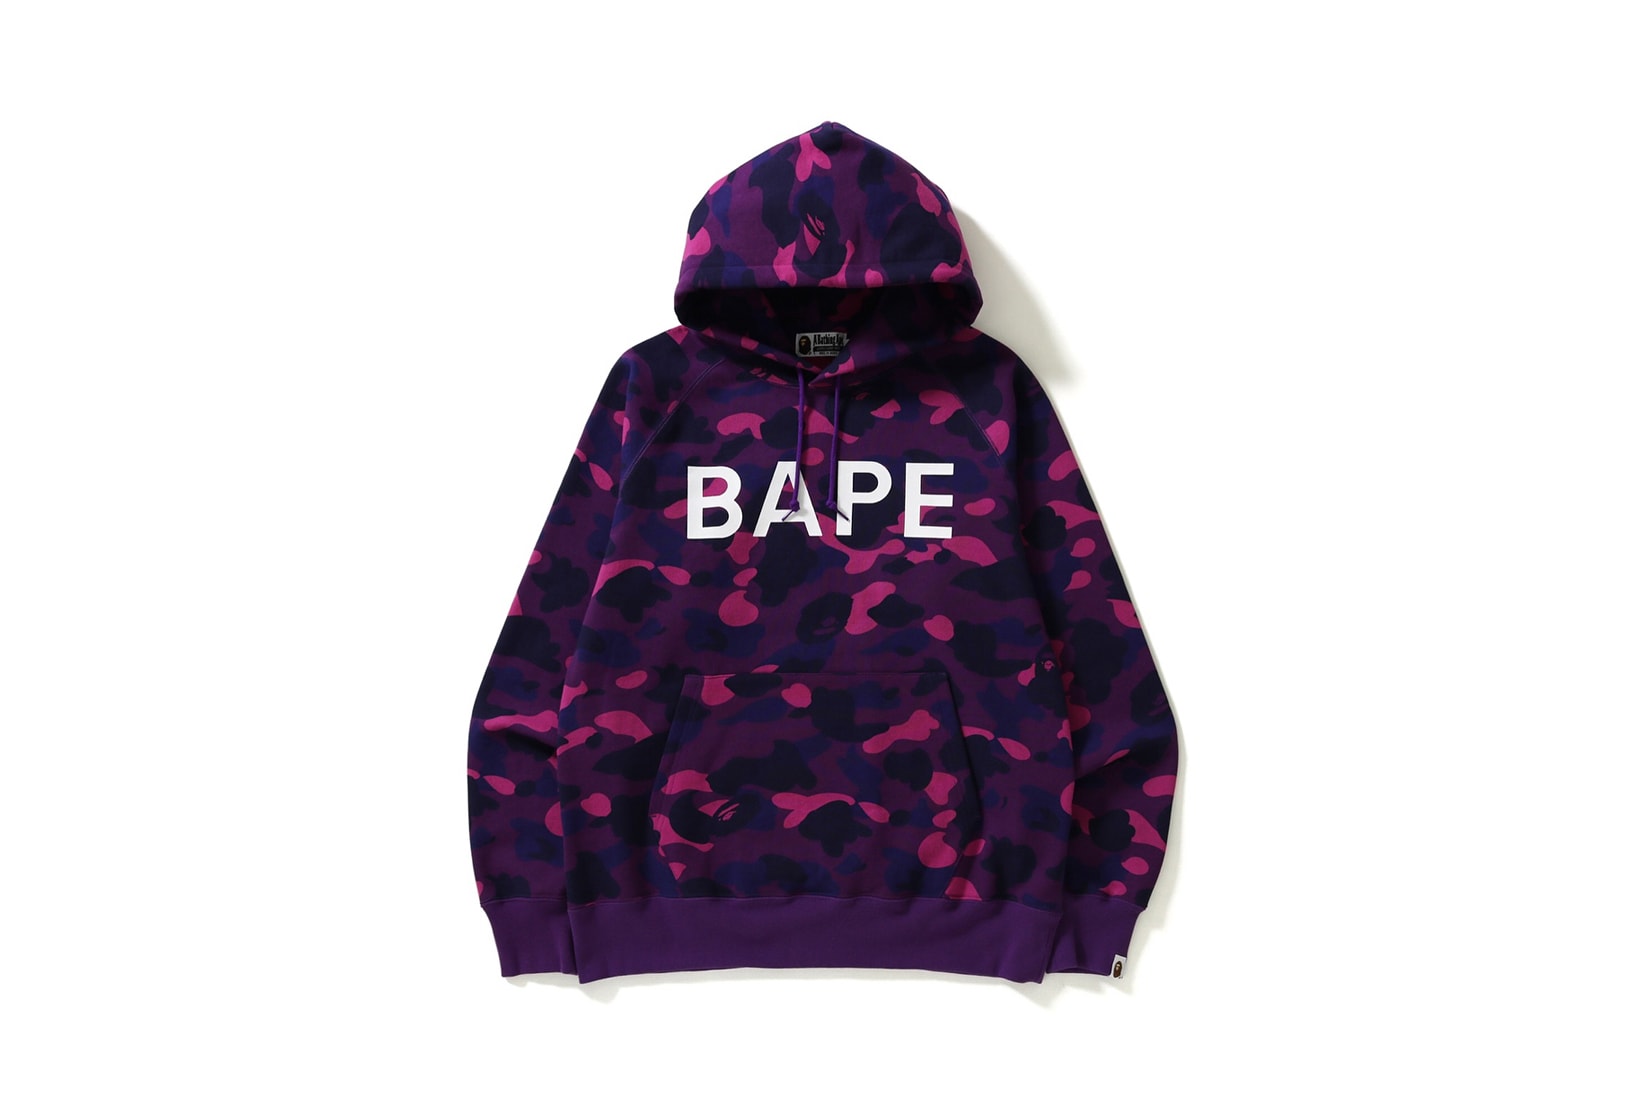 BAPE Streetwear Fashion Apparel Clothing Jackets Hoodies Release Date Info Drops November 11